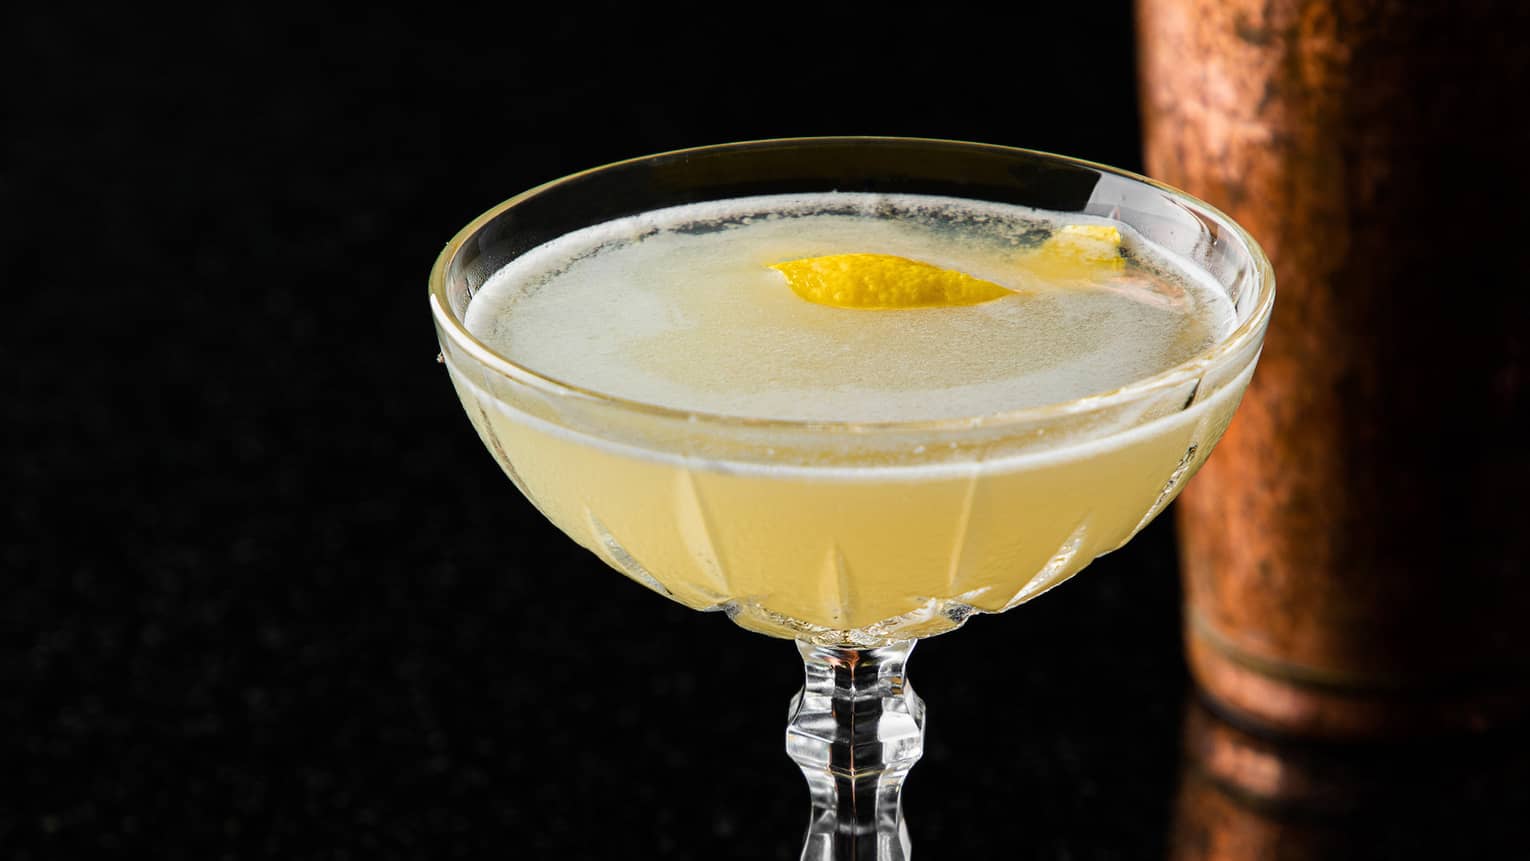 The Bee's Knees cocktail ? Iron Ball Gin, Lemon, Longan Honey